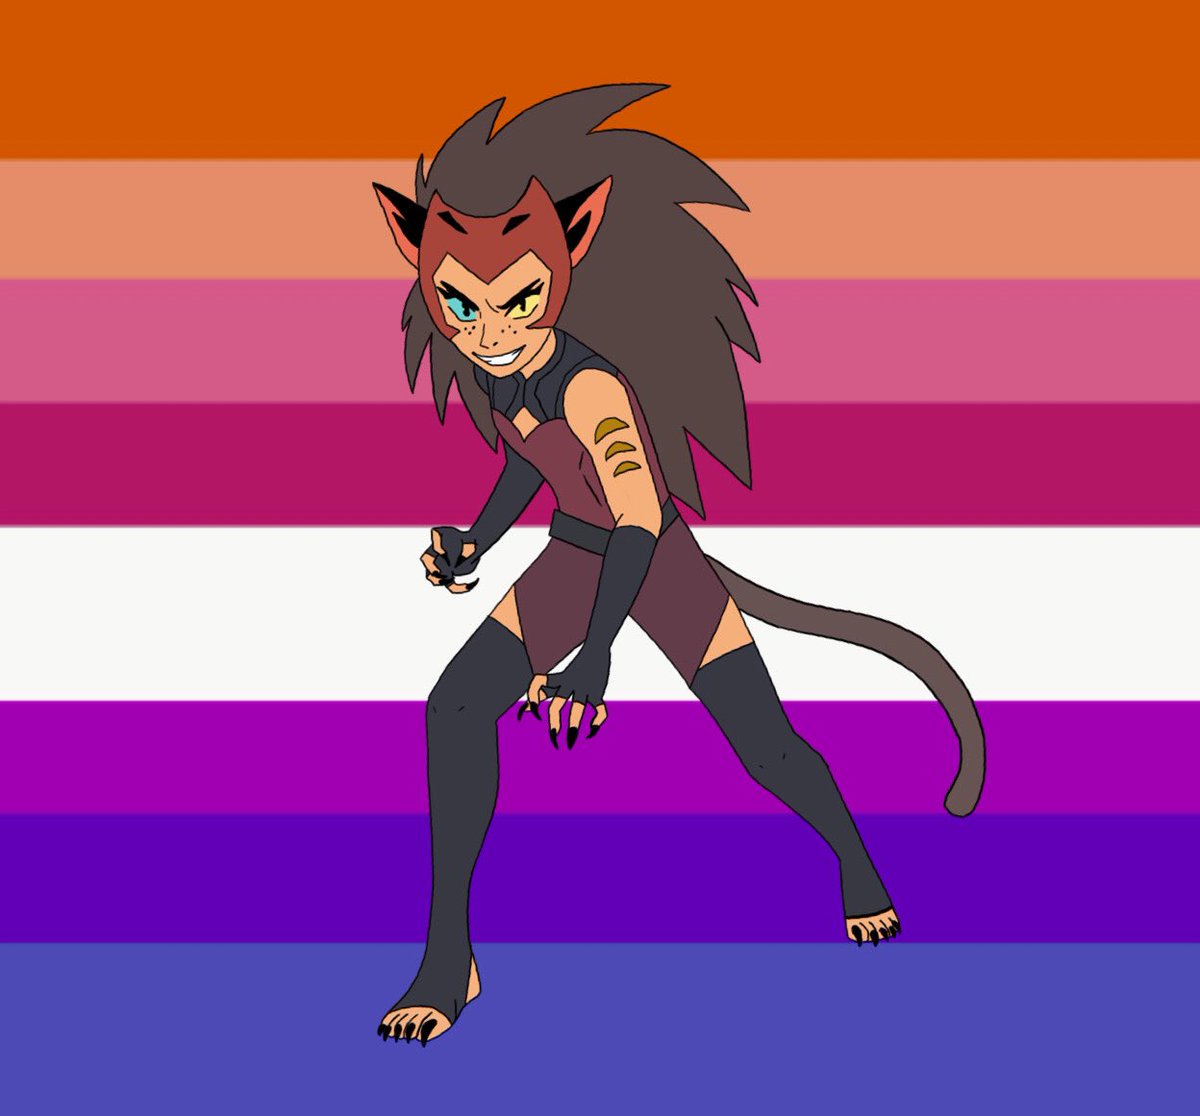 catra is a bi lesbian.